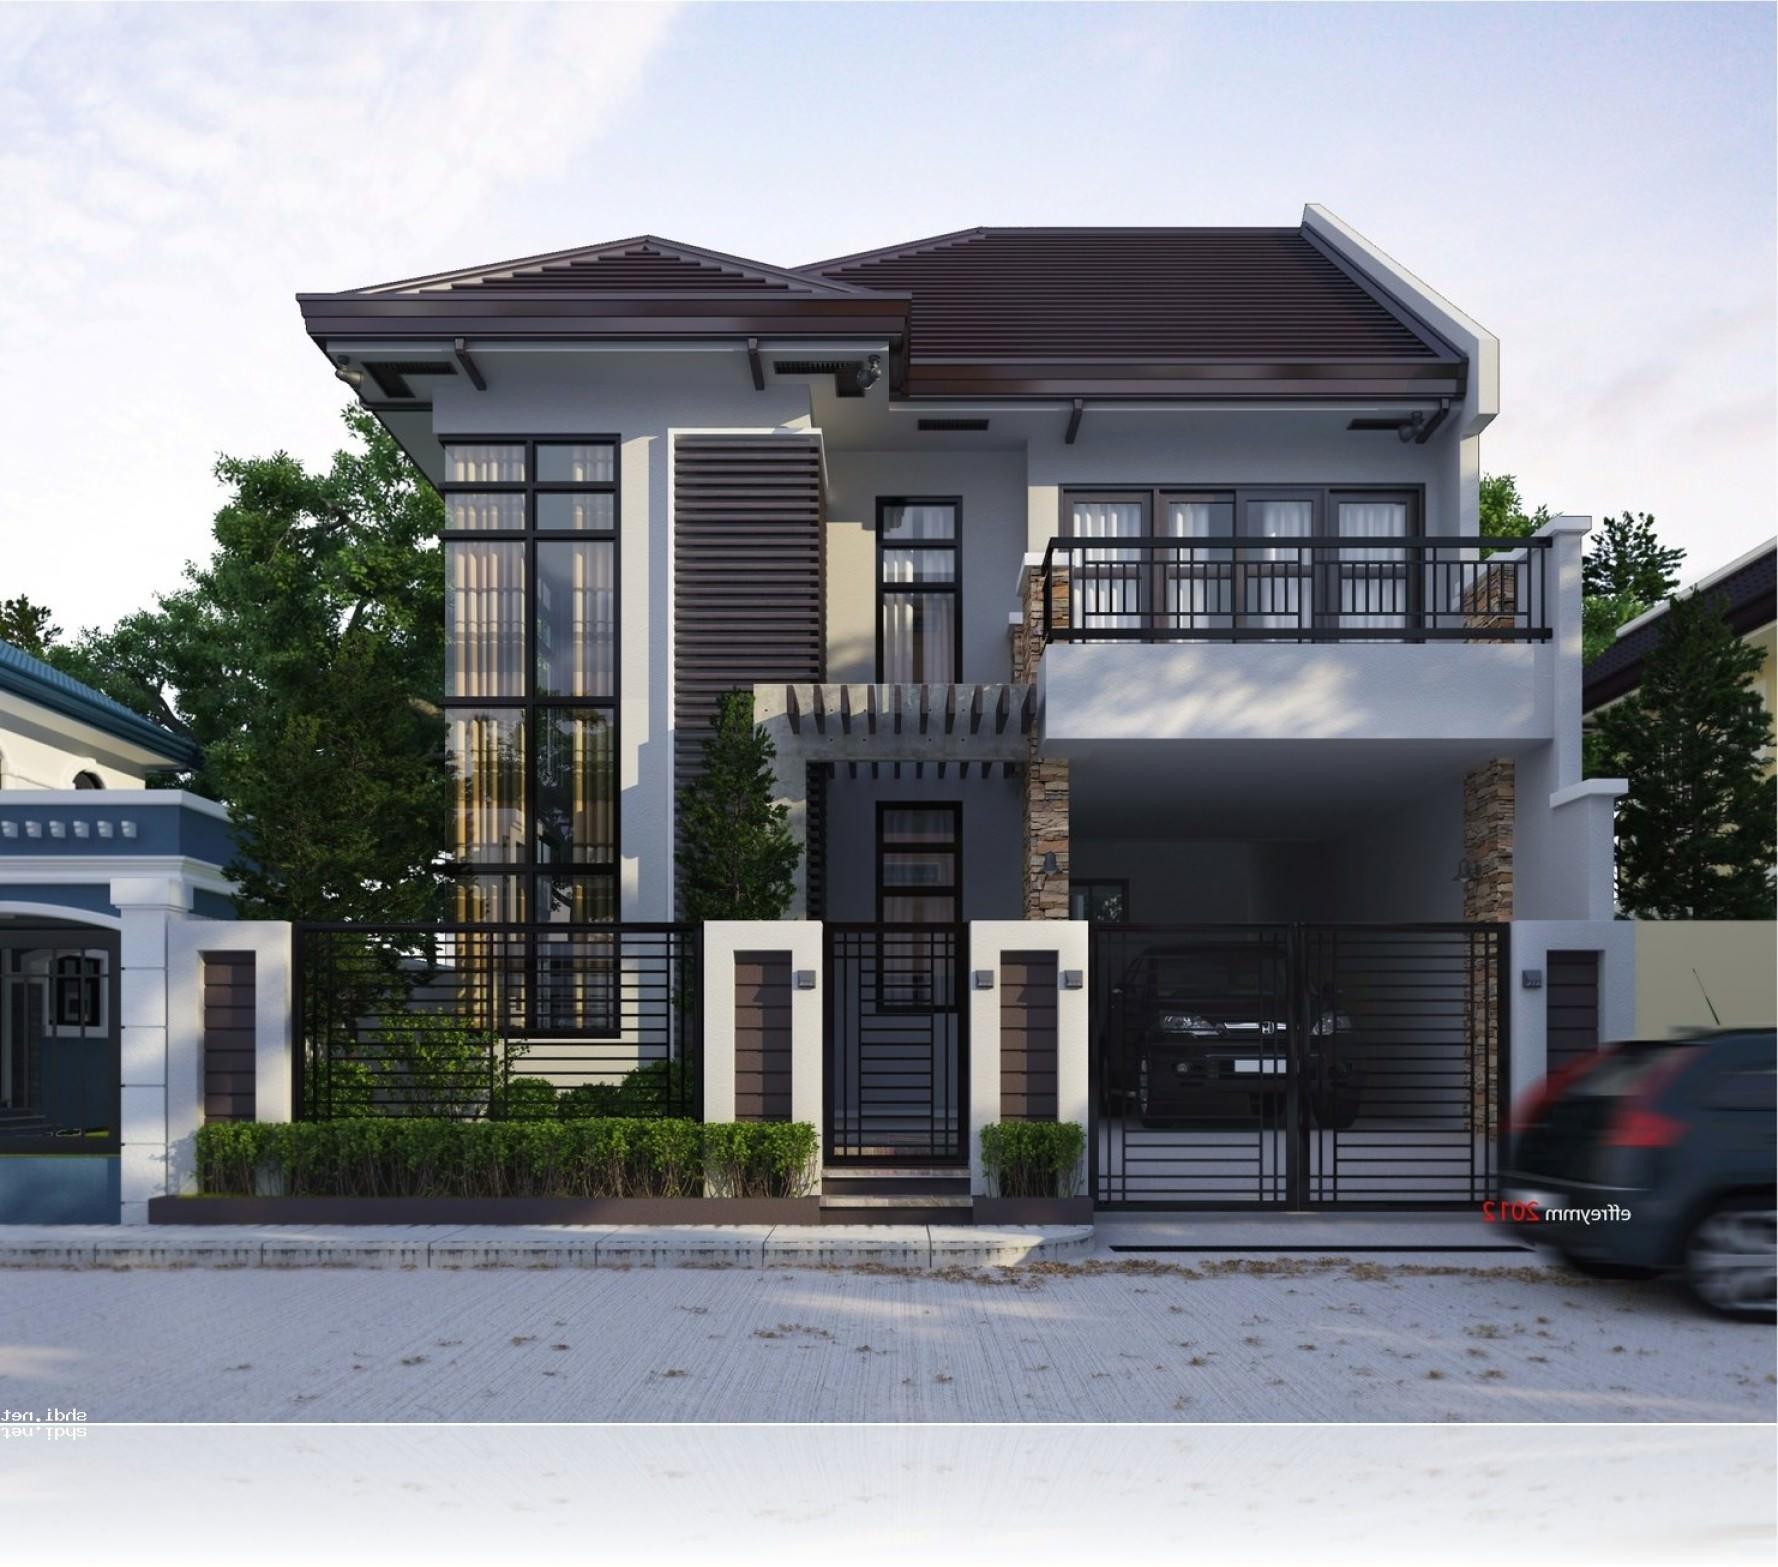 Modern house 2. 2 Storey House Design. House Design 2 storey Modern. Проект дома Филиппины. Small Modern House 2 story.